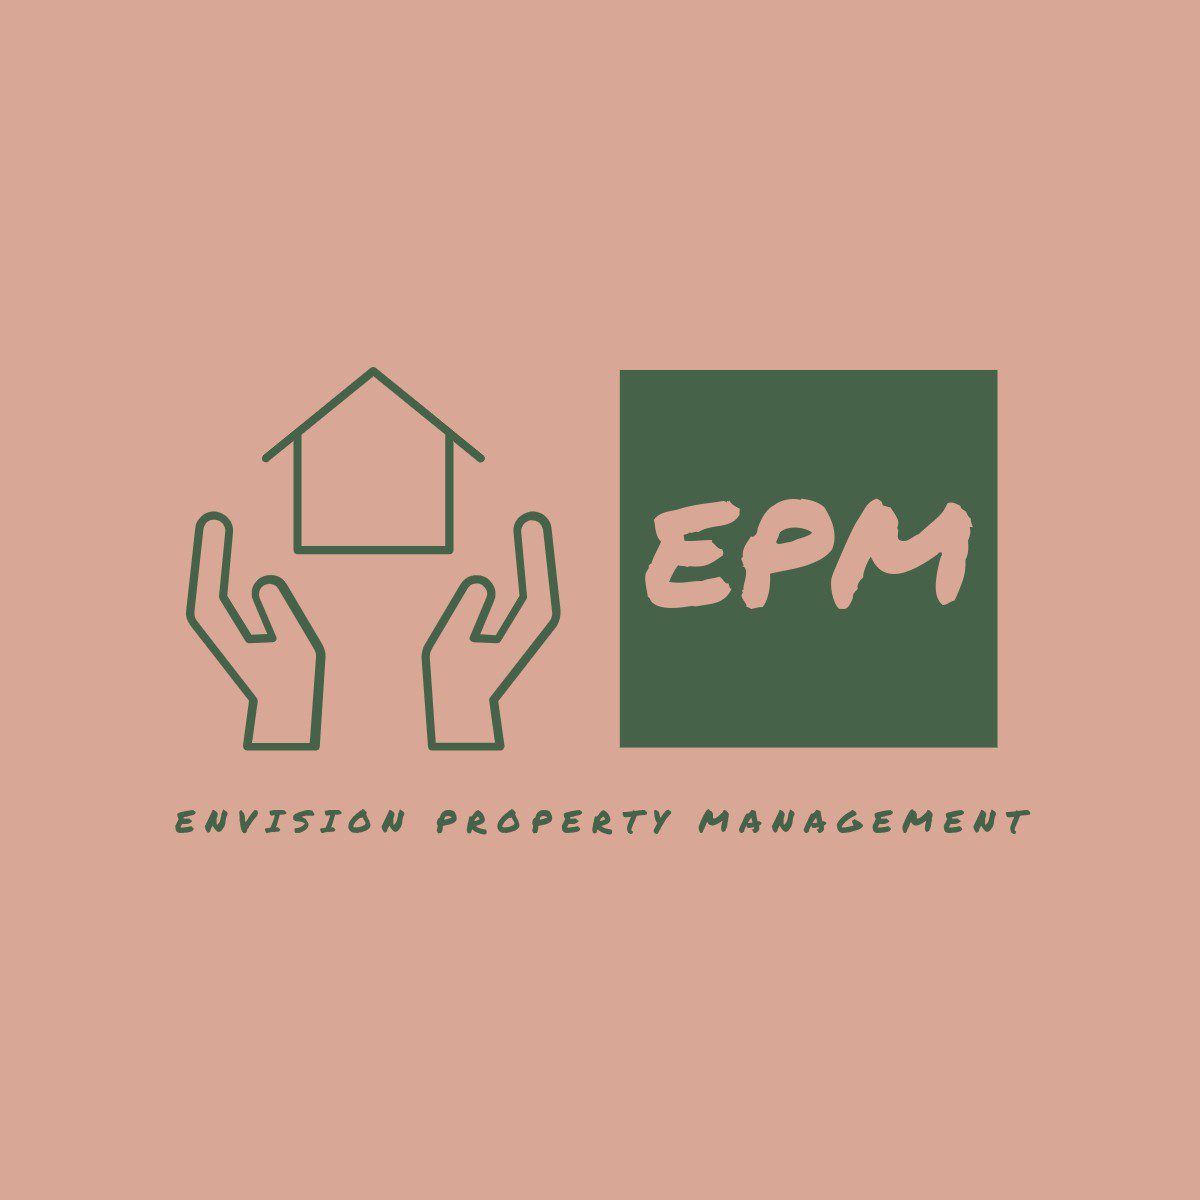 Envision Property Management (EPM)